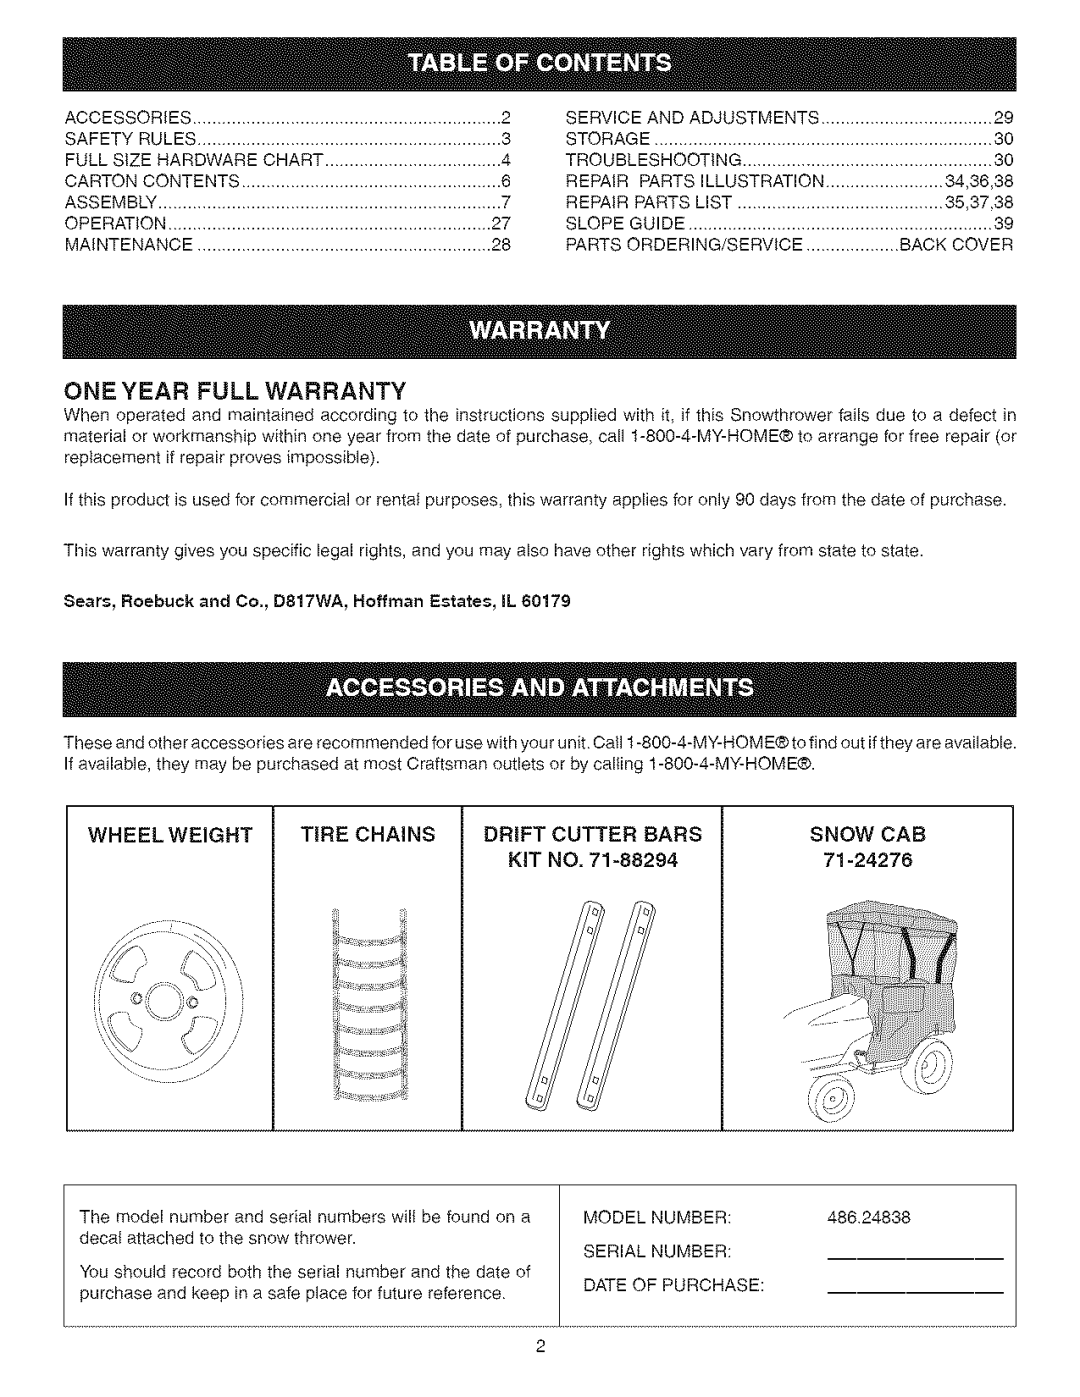 Craftsman 486.24838 manual One Year Full Warranty, Drift, Cutter Bars, Snow Cab, 71-24276 